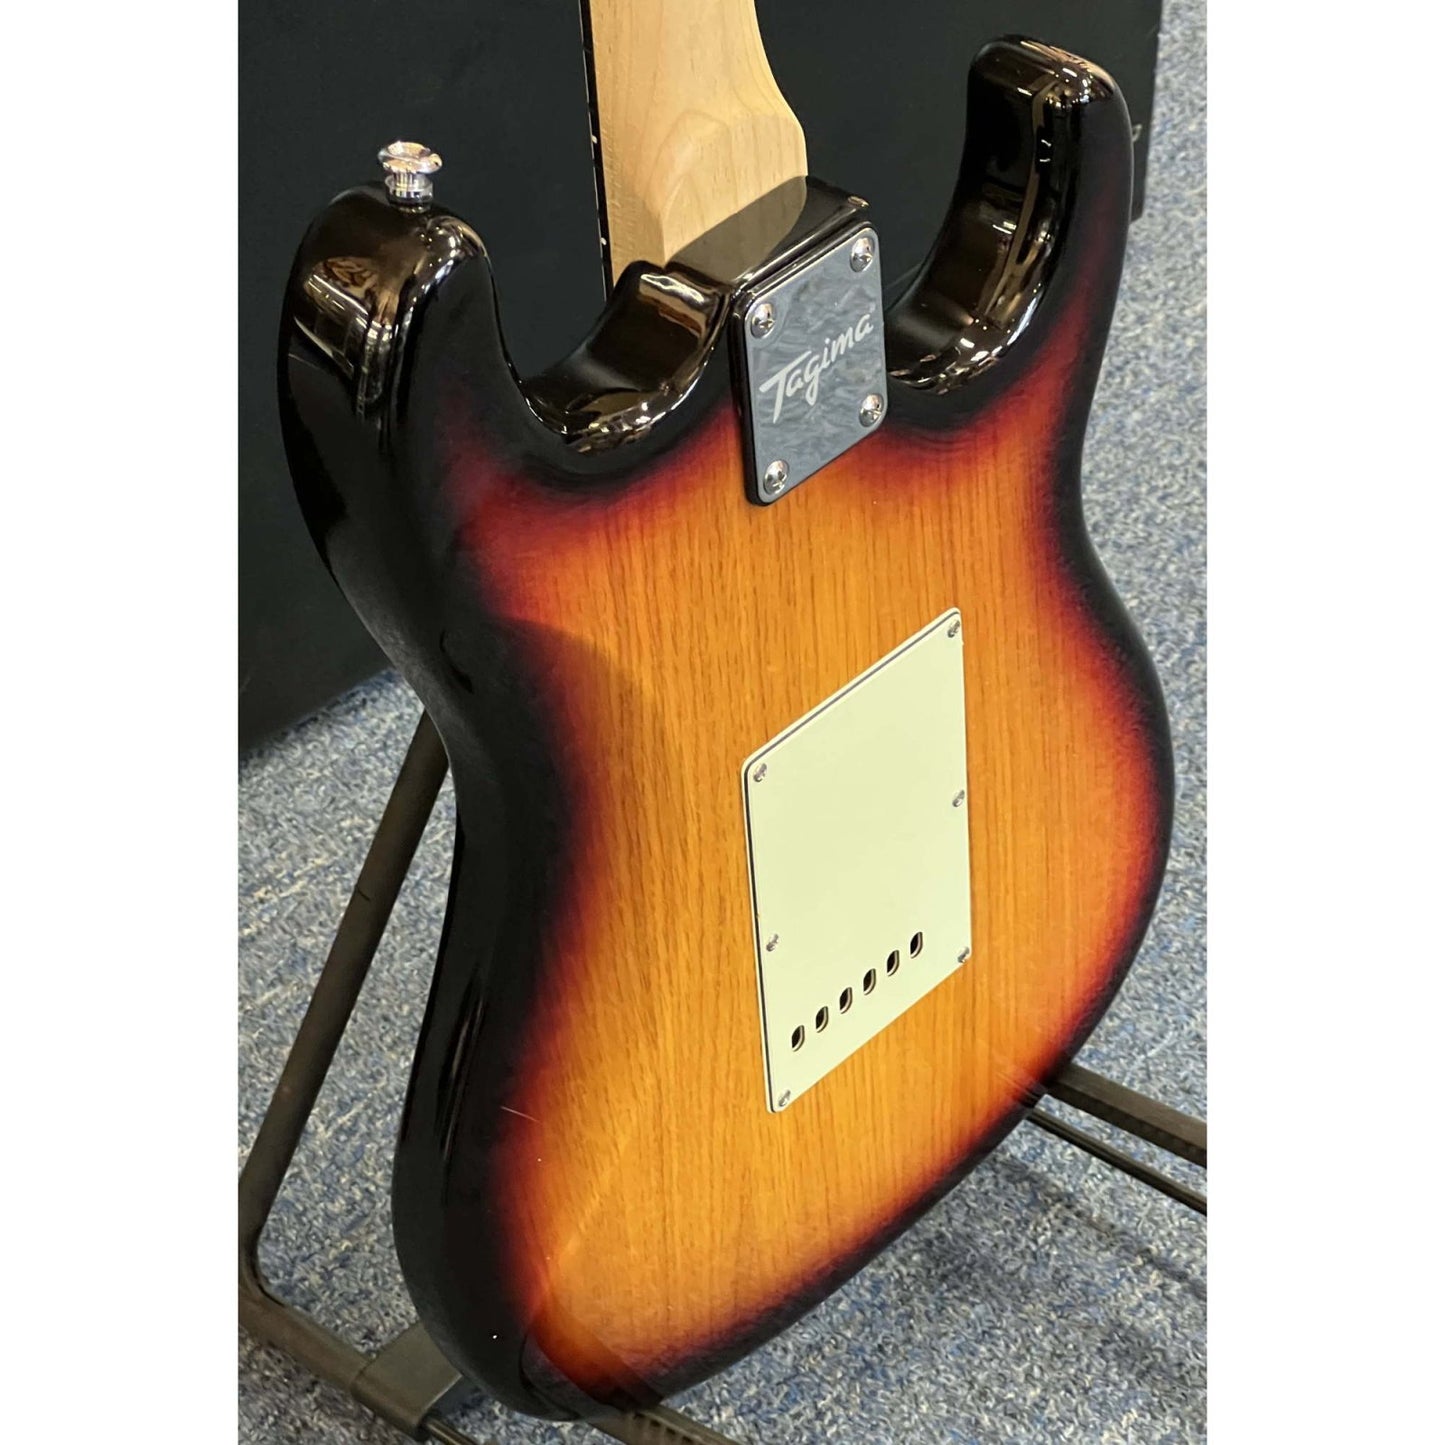 Tagima TG500 Electric Guitar Lefty Sunburst